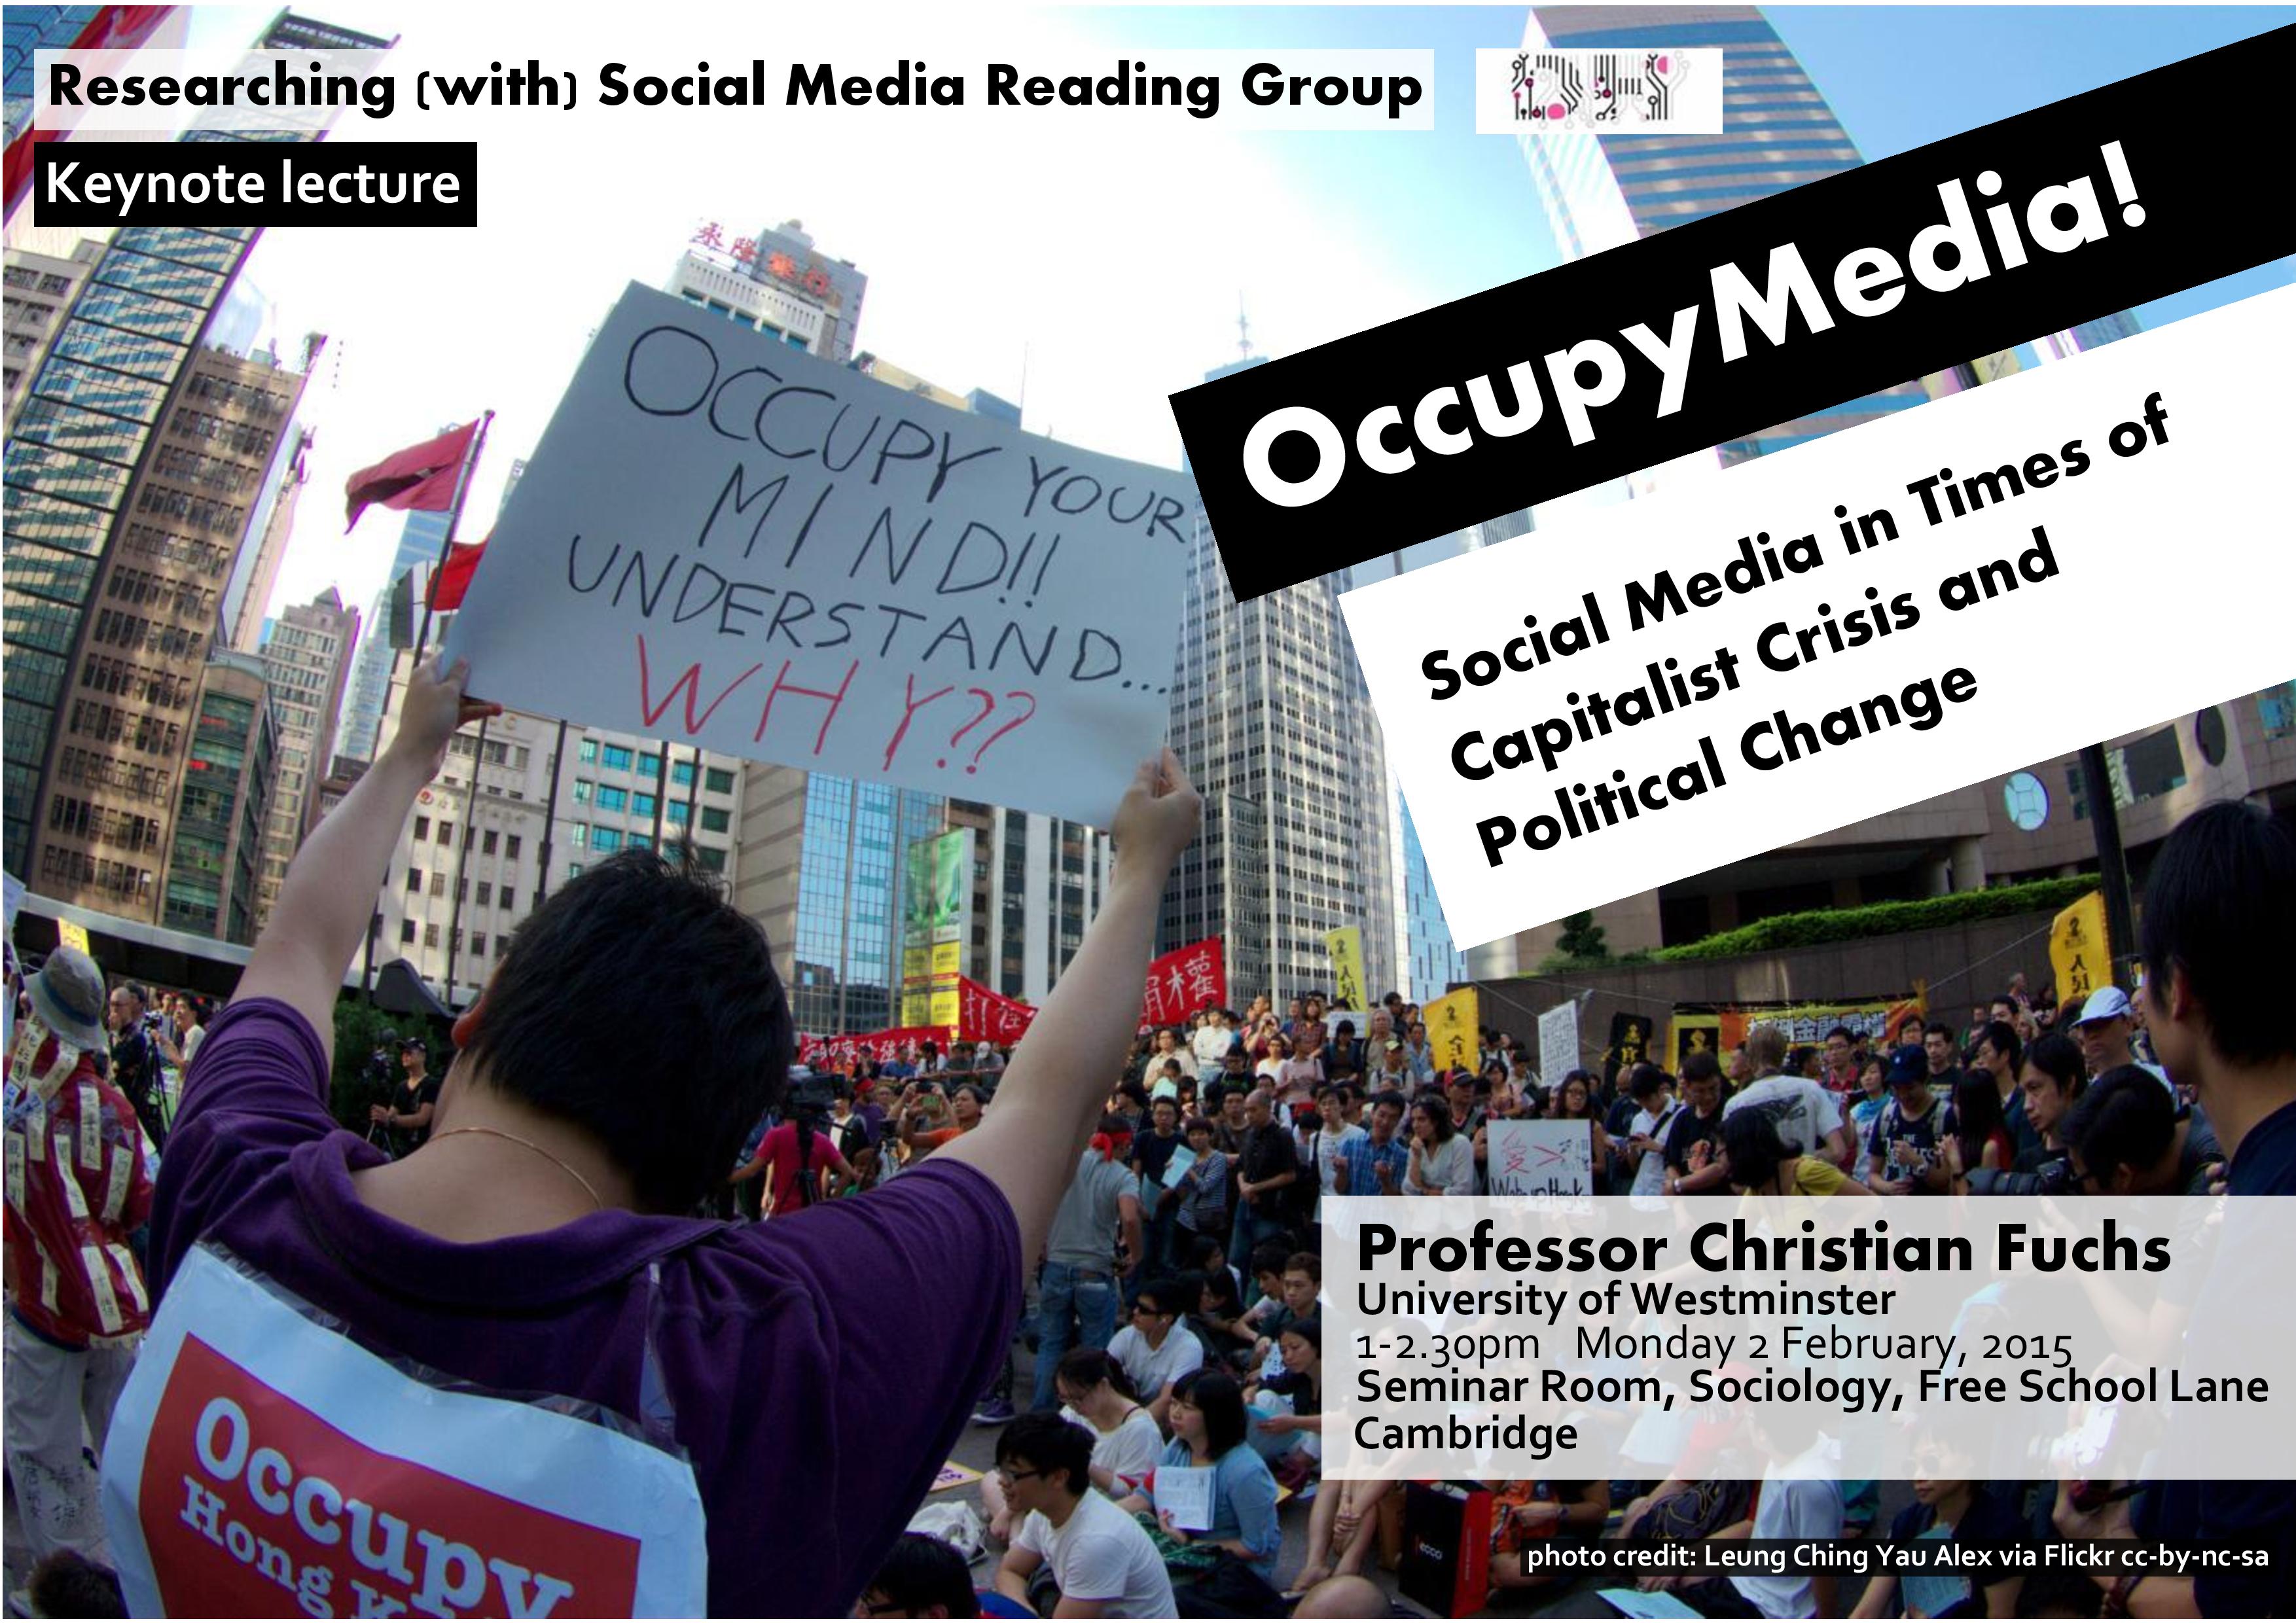 Christian Fuchs, 'OccupyMedia!', 2nd February 2015, 1pm